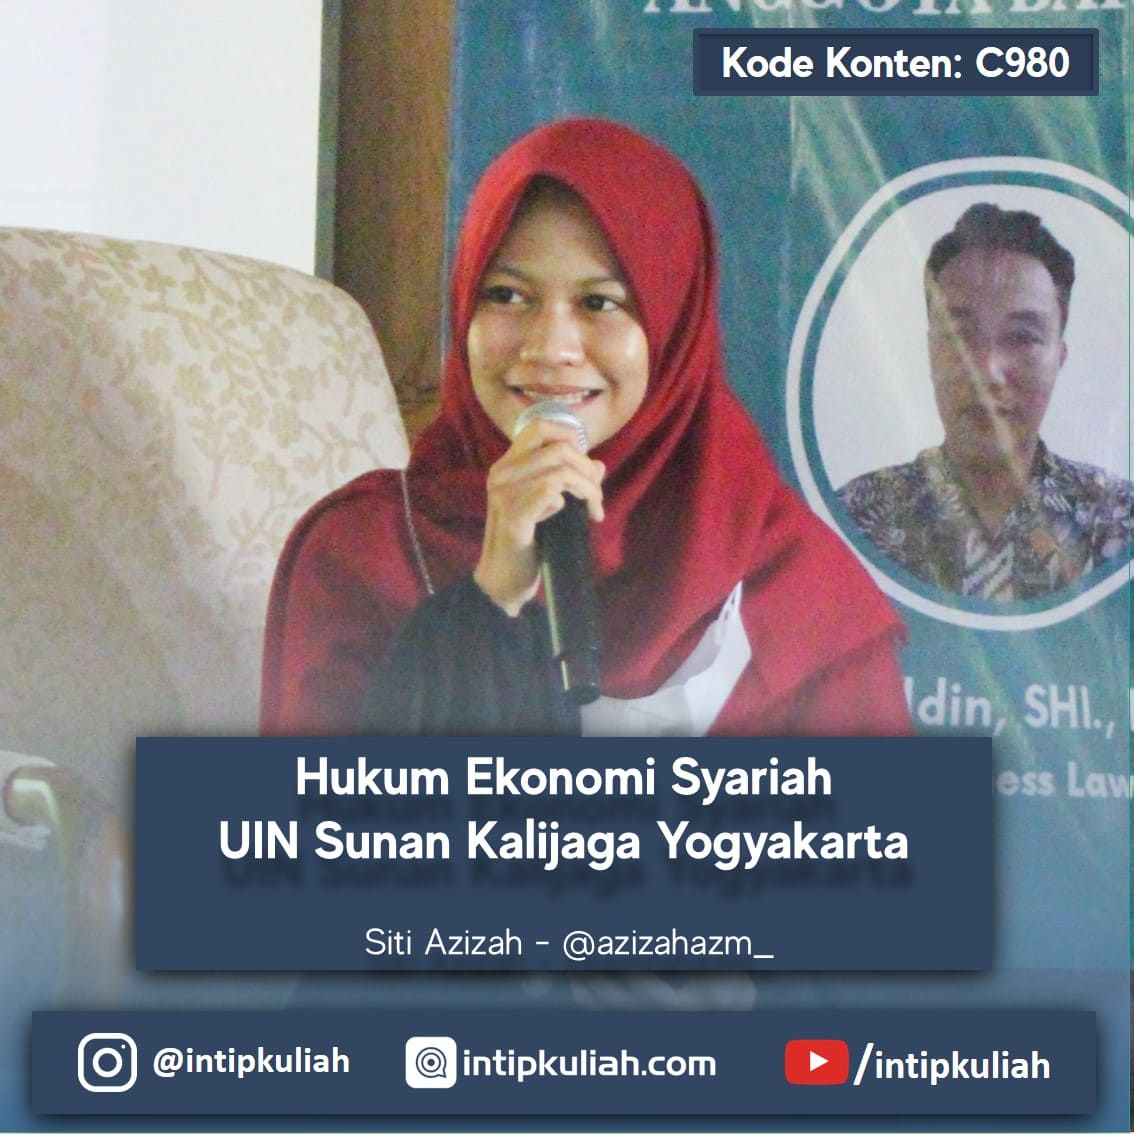 Hukum Ekonomi Syariah UIN Sunan Kalijaga Yogyakarta (Azizah)